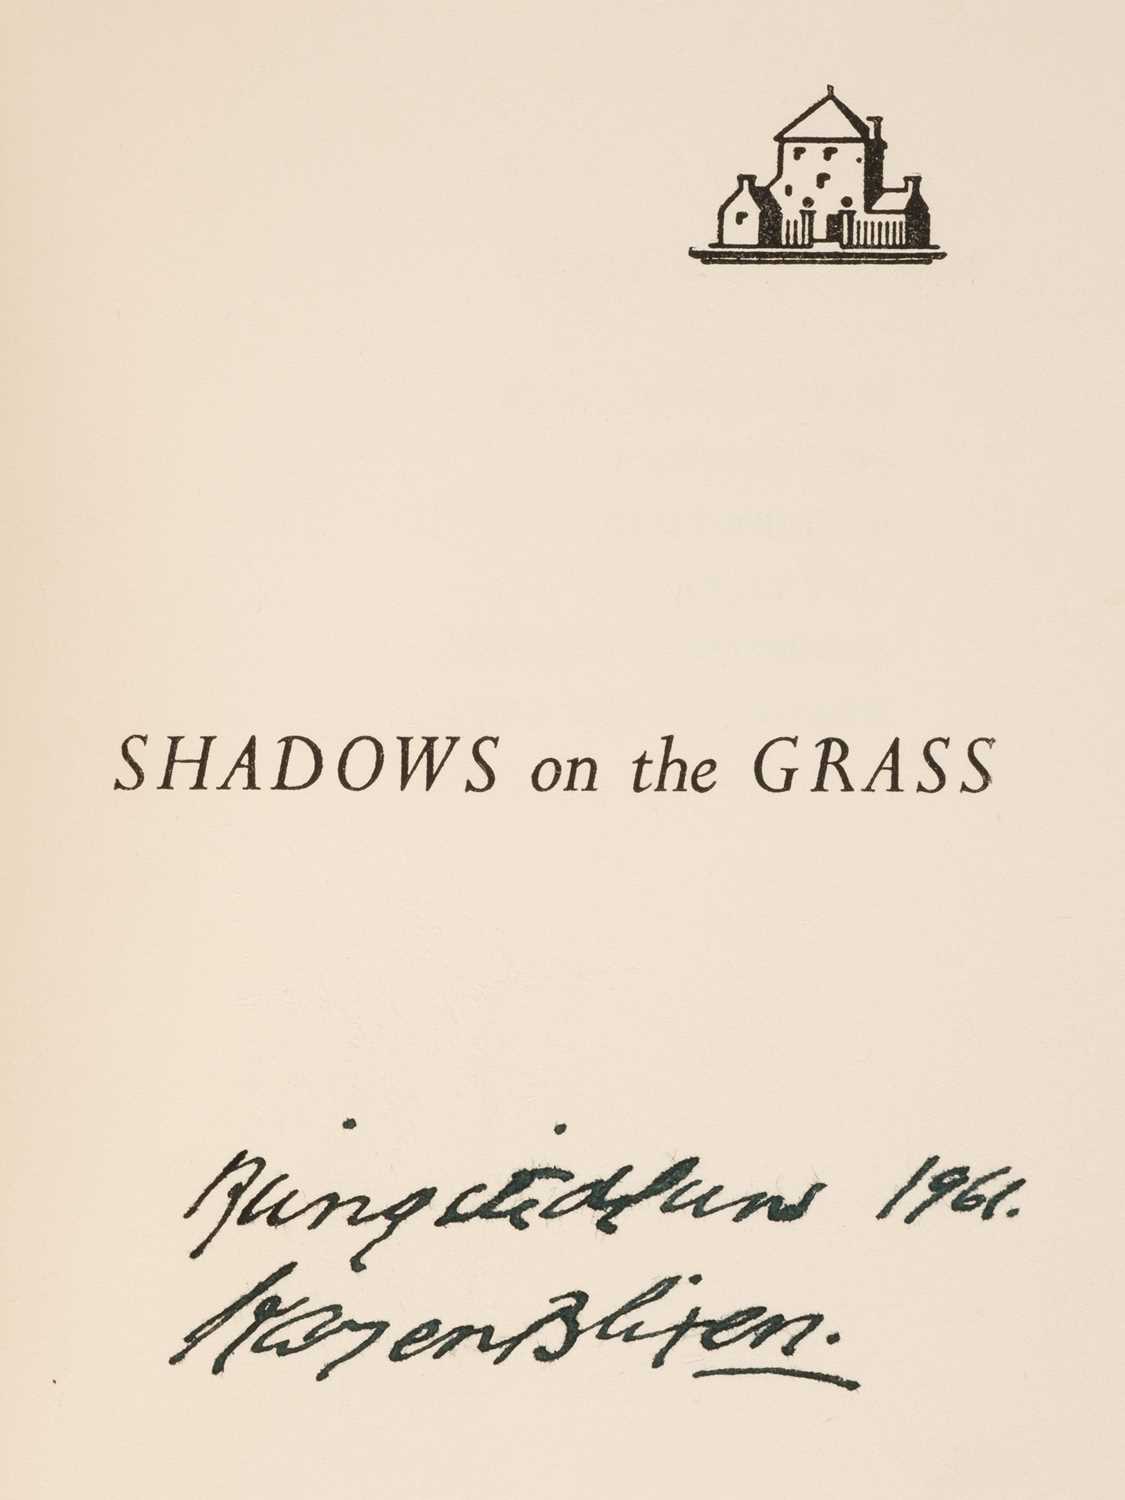 Lot 343 - Dinesen (Isak). Shadows on the Grass, 1st US edition, 1961